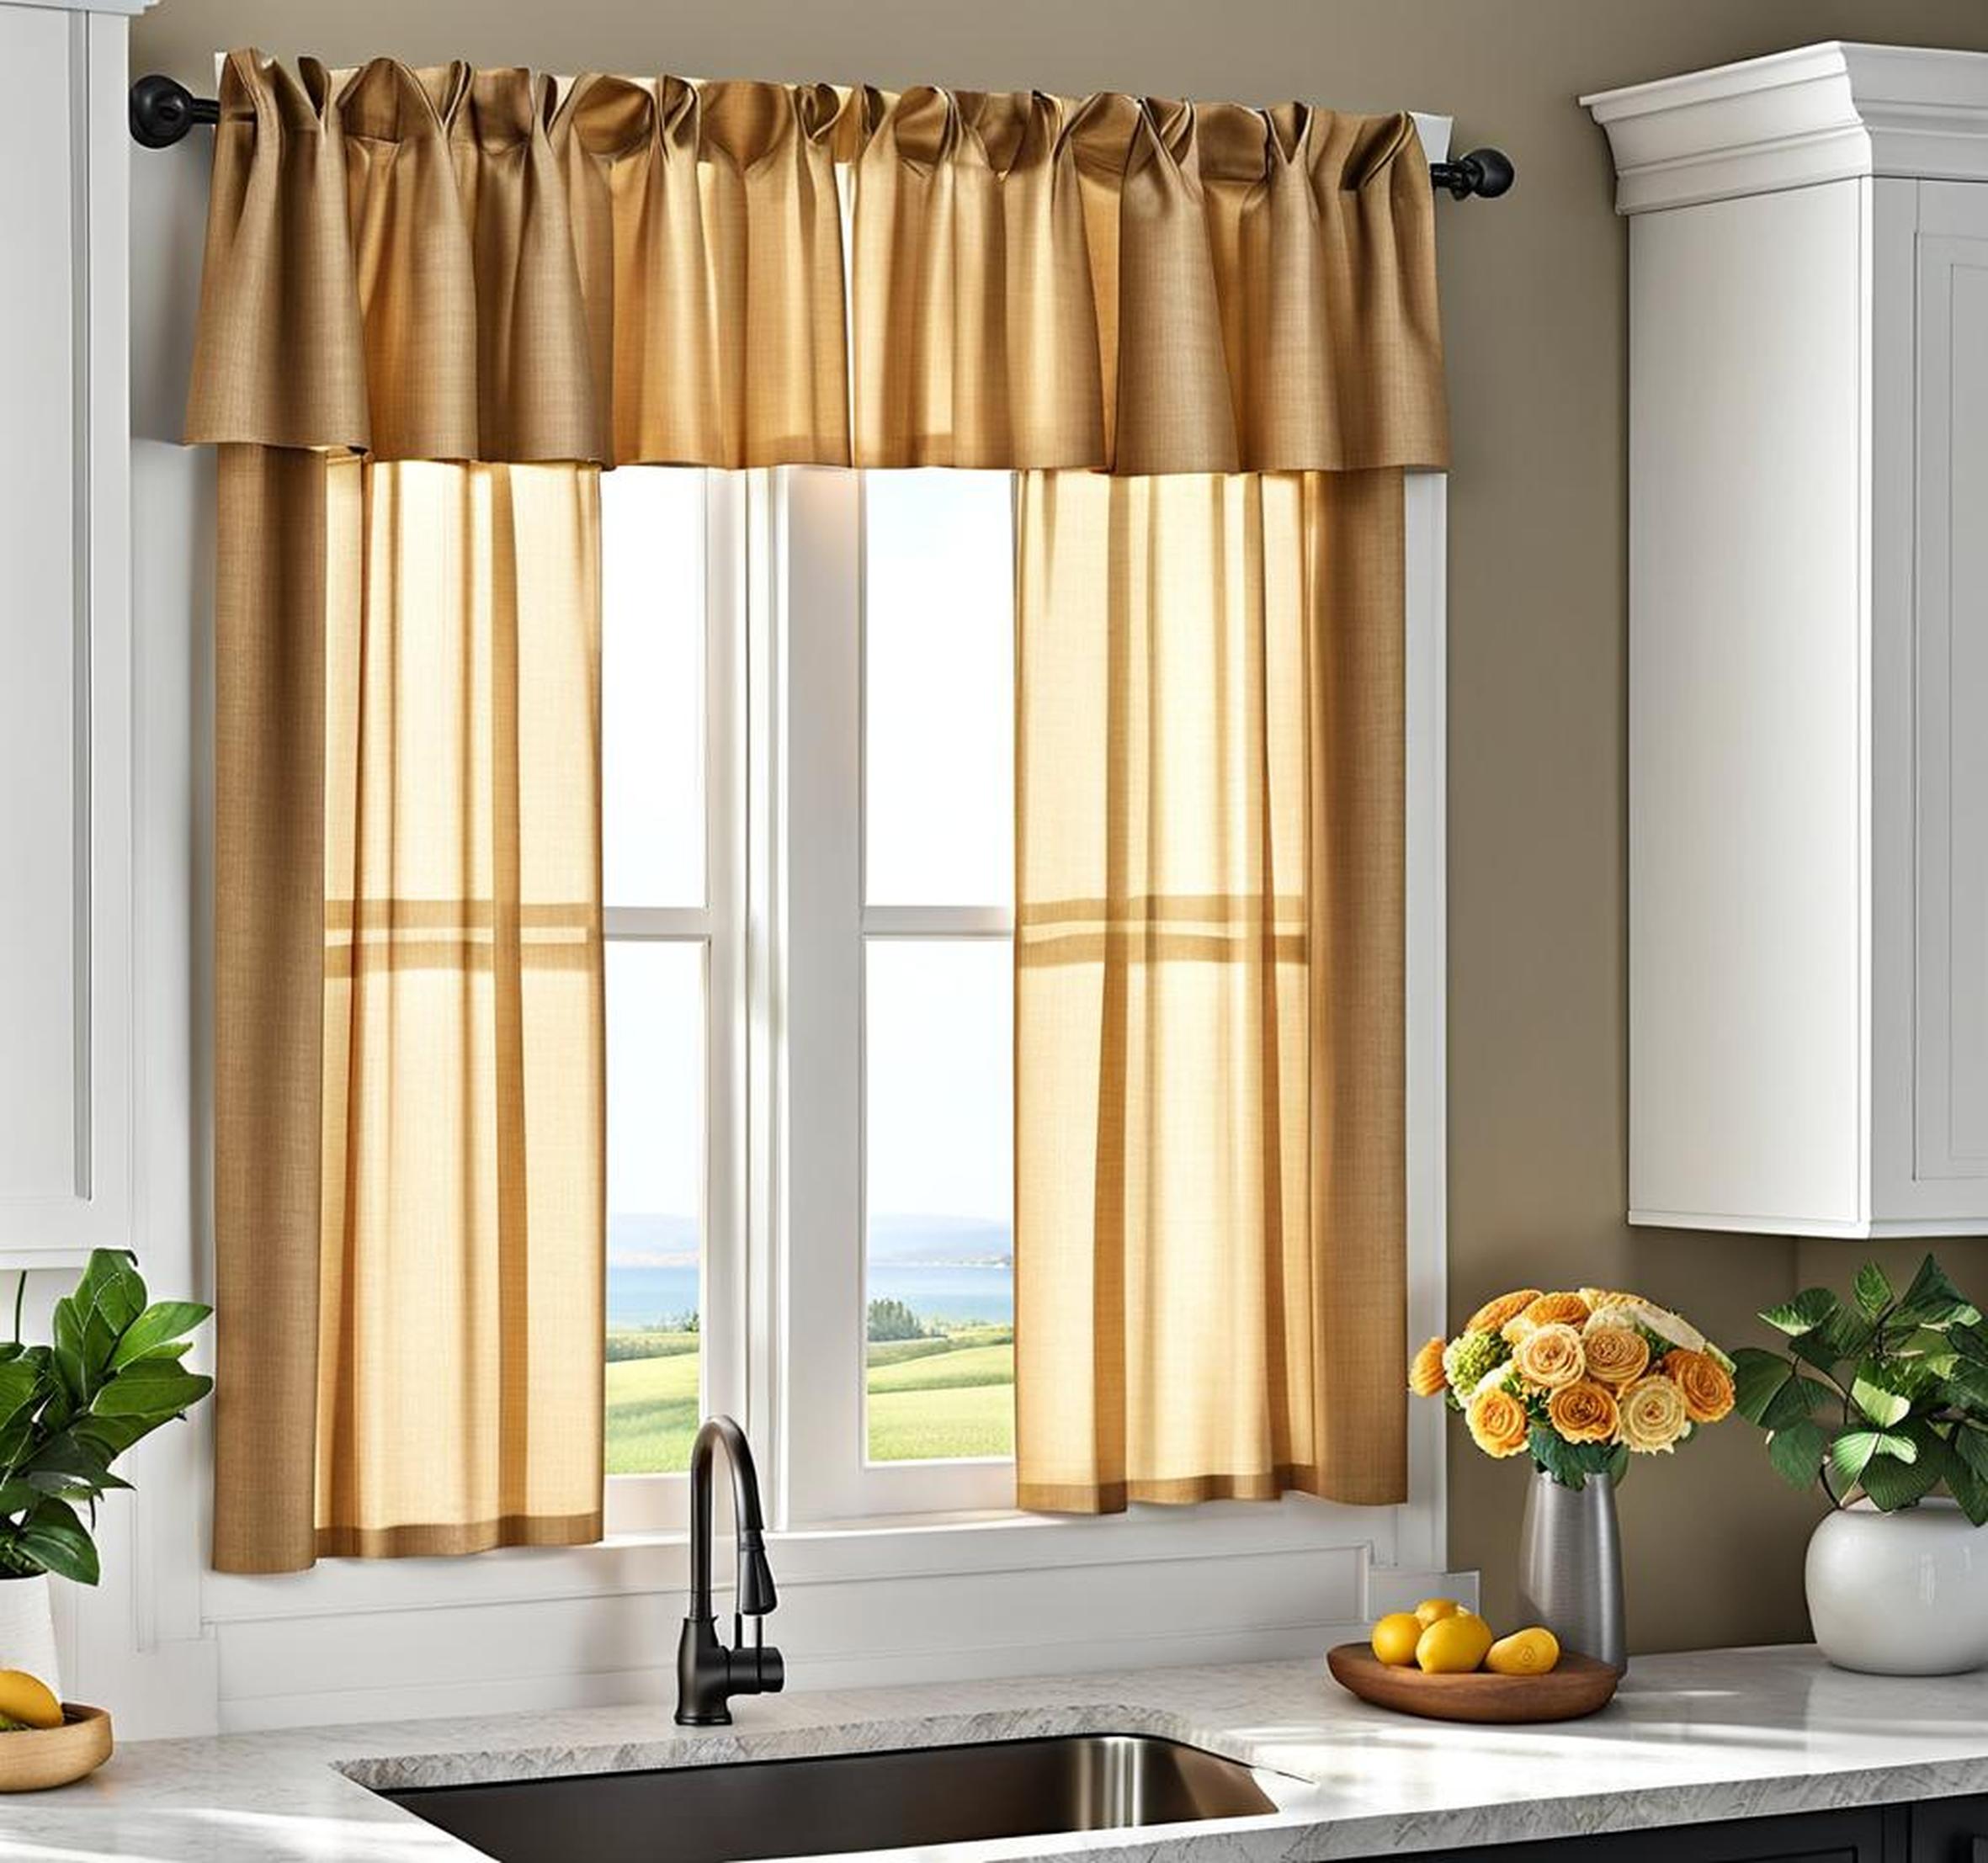 curtain for window above kitchen sink